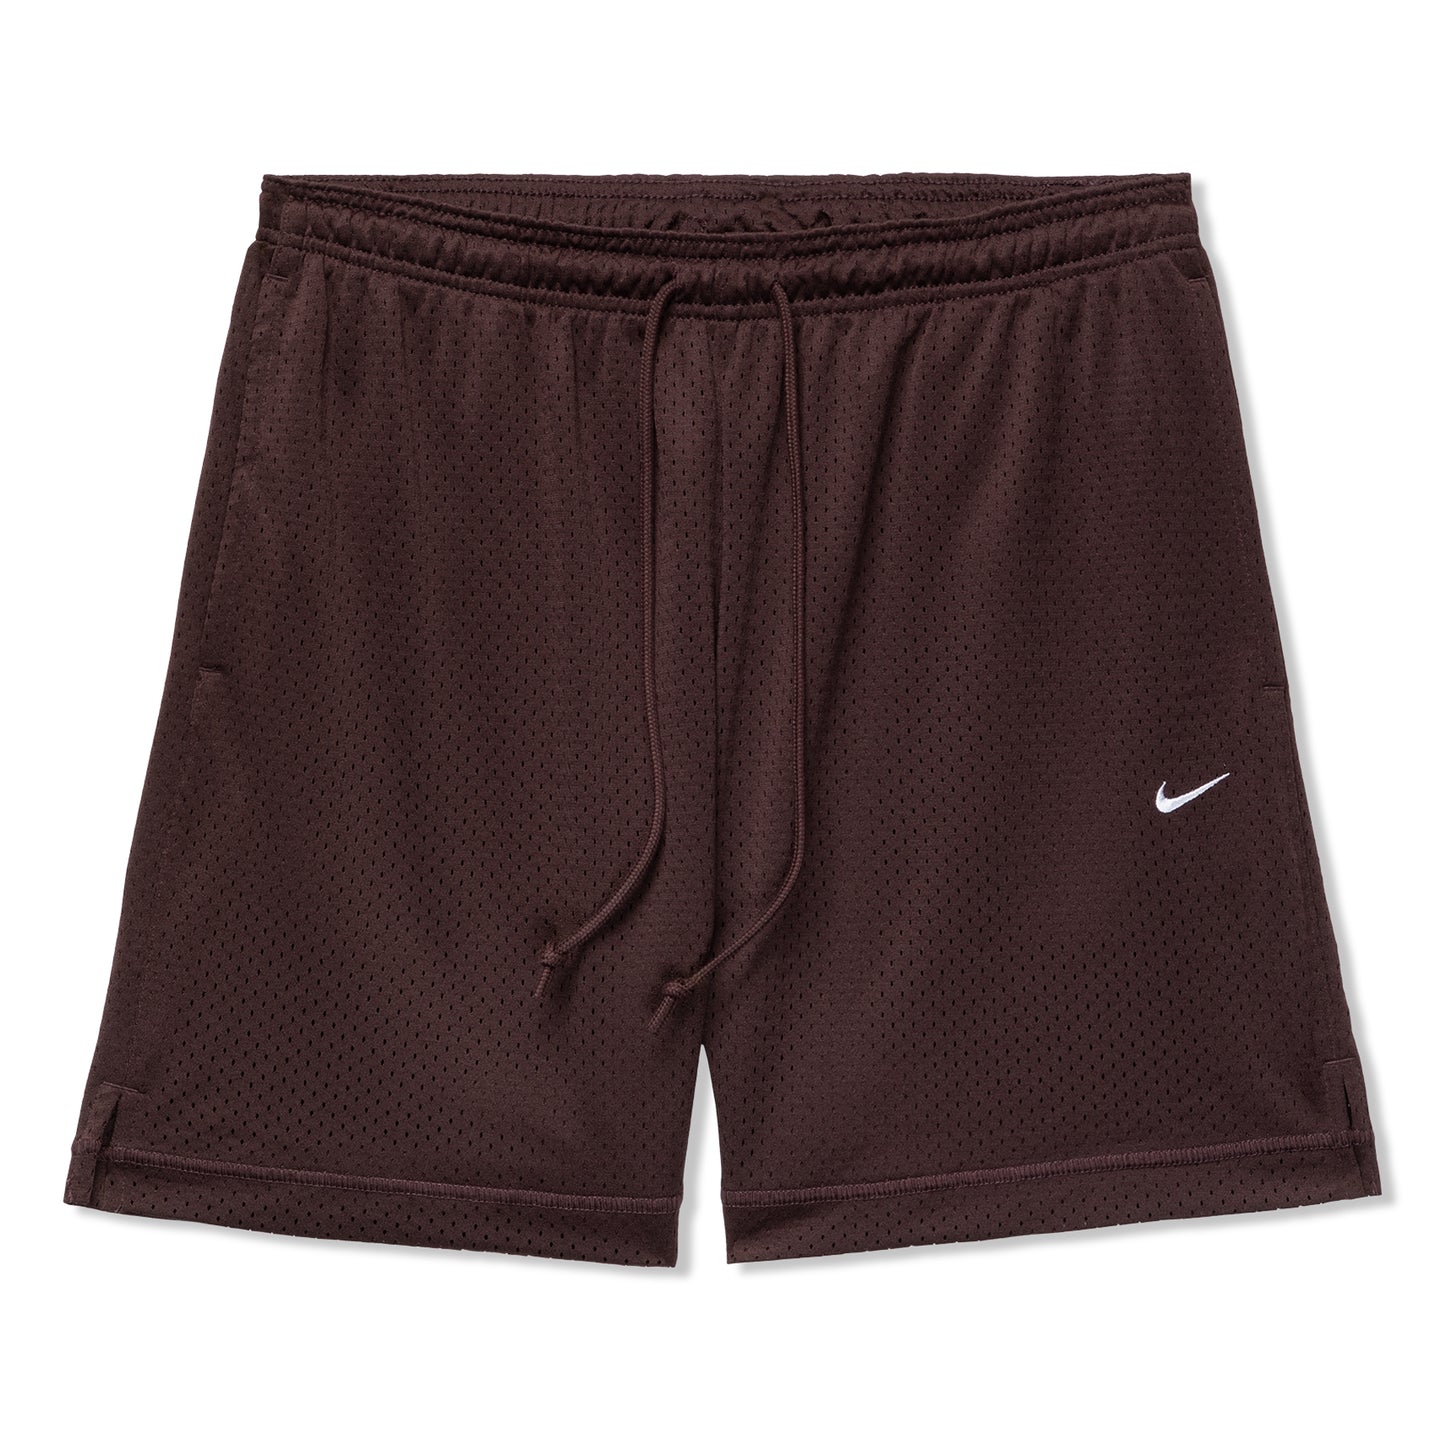 Nike Sportswear Mesh Shorts (Brown/White)